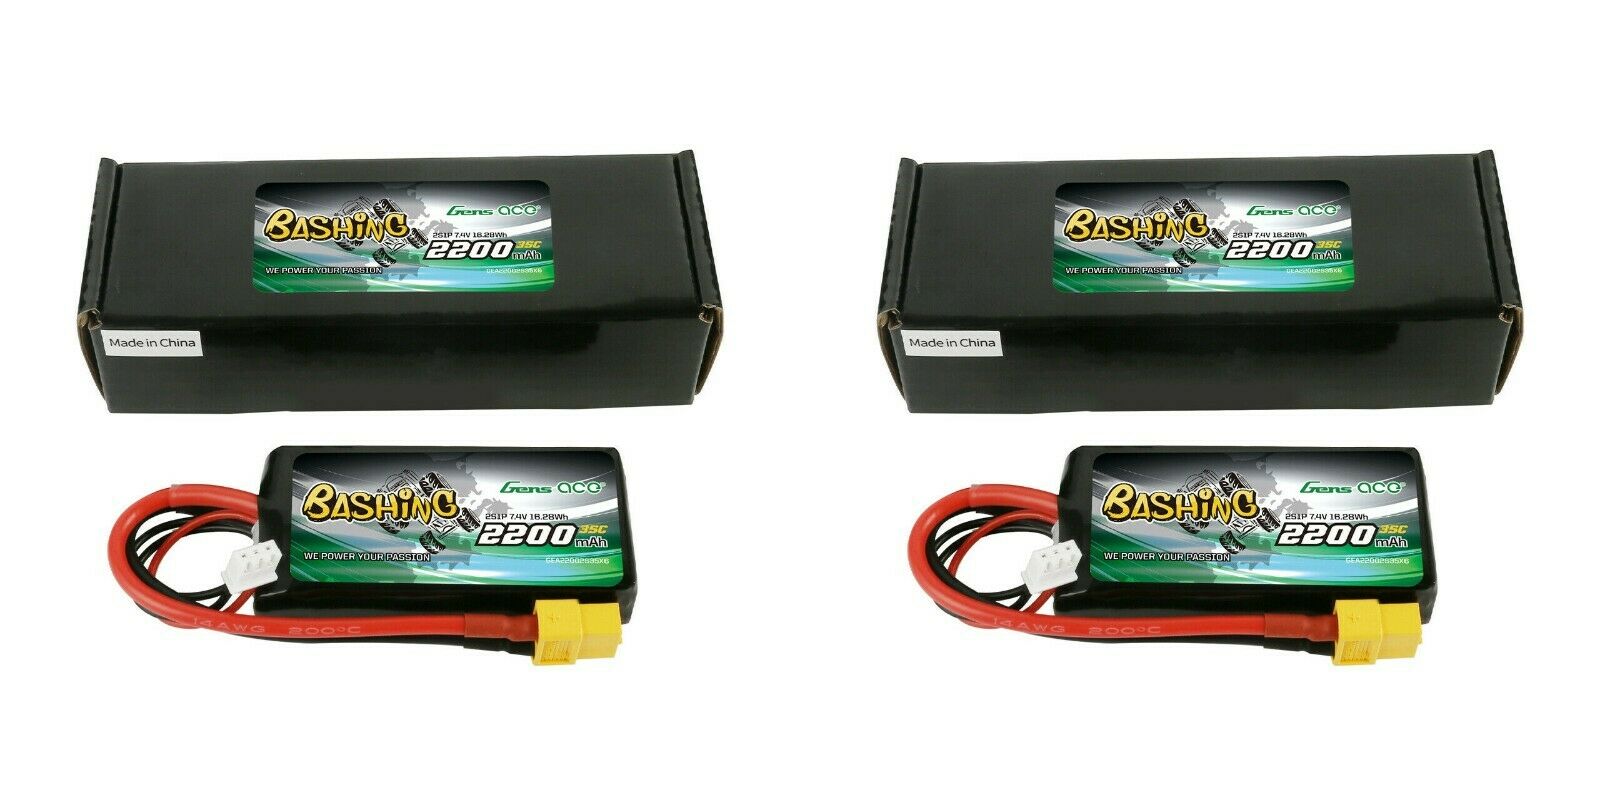 2X Gens Ace 2200mAh 7.4V 35C 2S Lipo RC Battery XT60 TRAXXAS adaptors 1/16 2820x